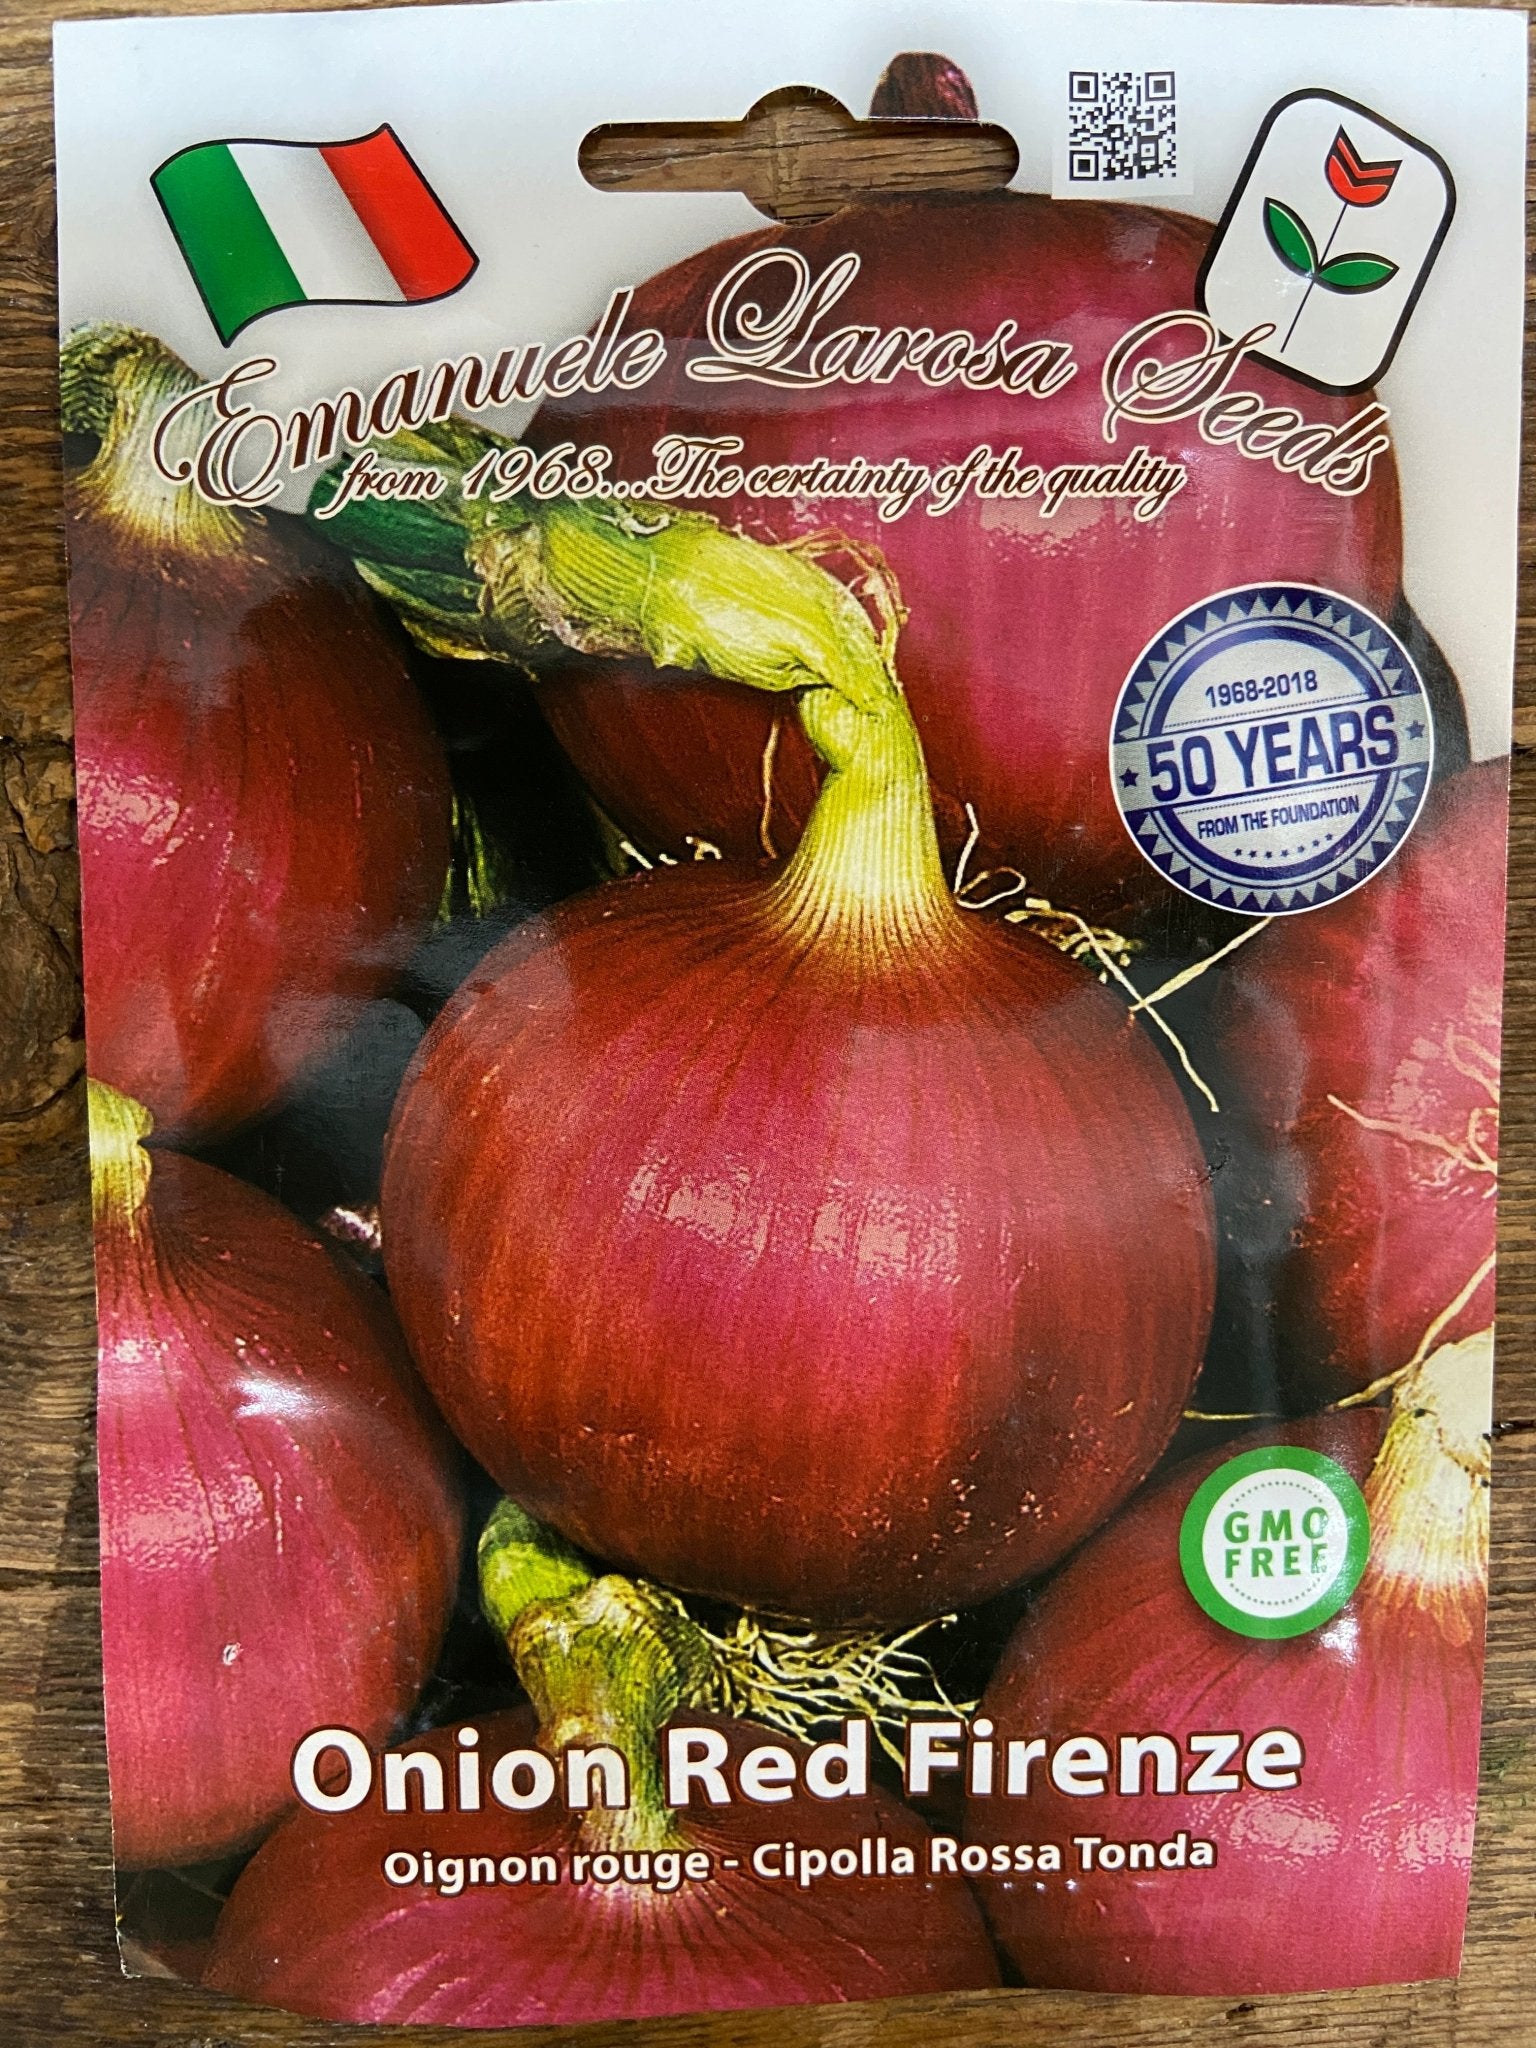 Onion Red Firenze